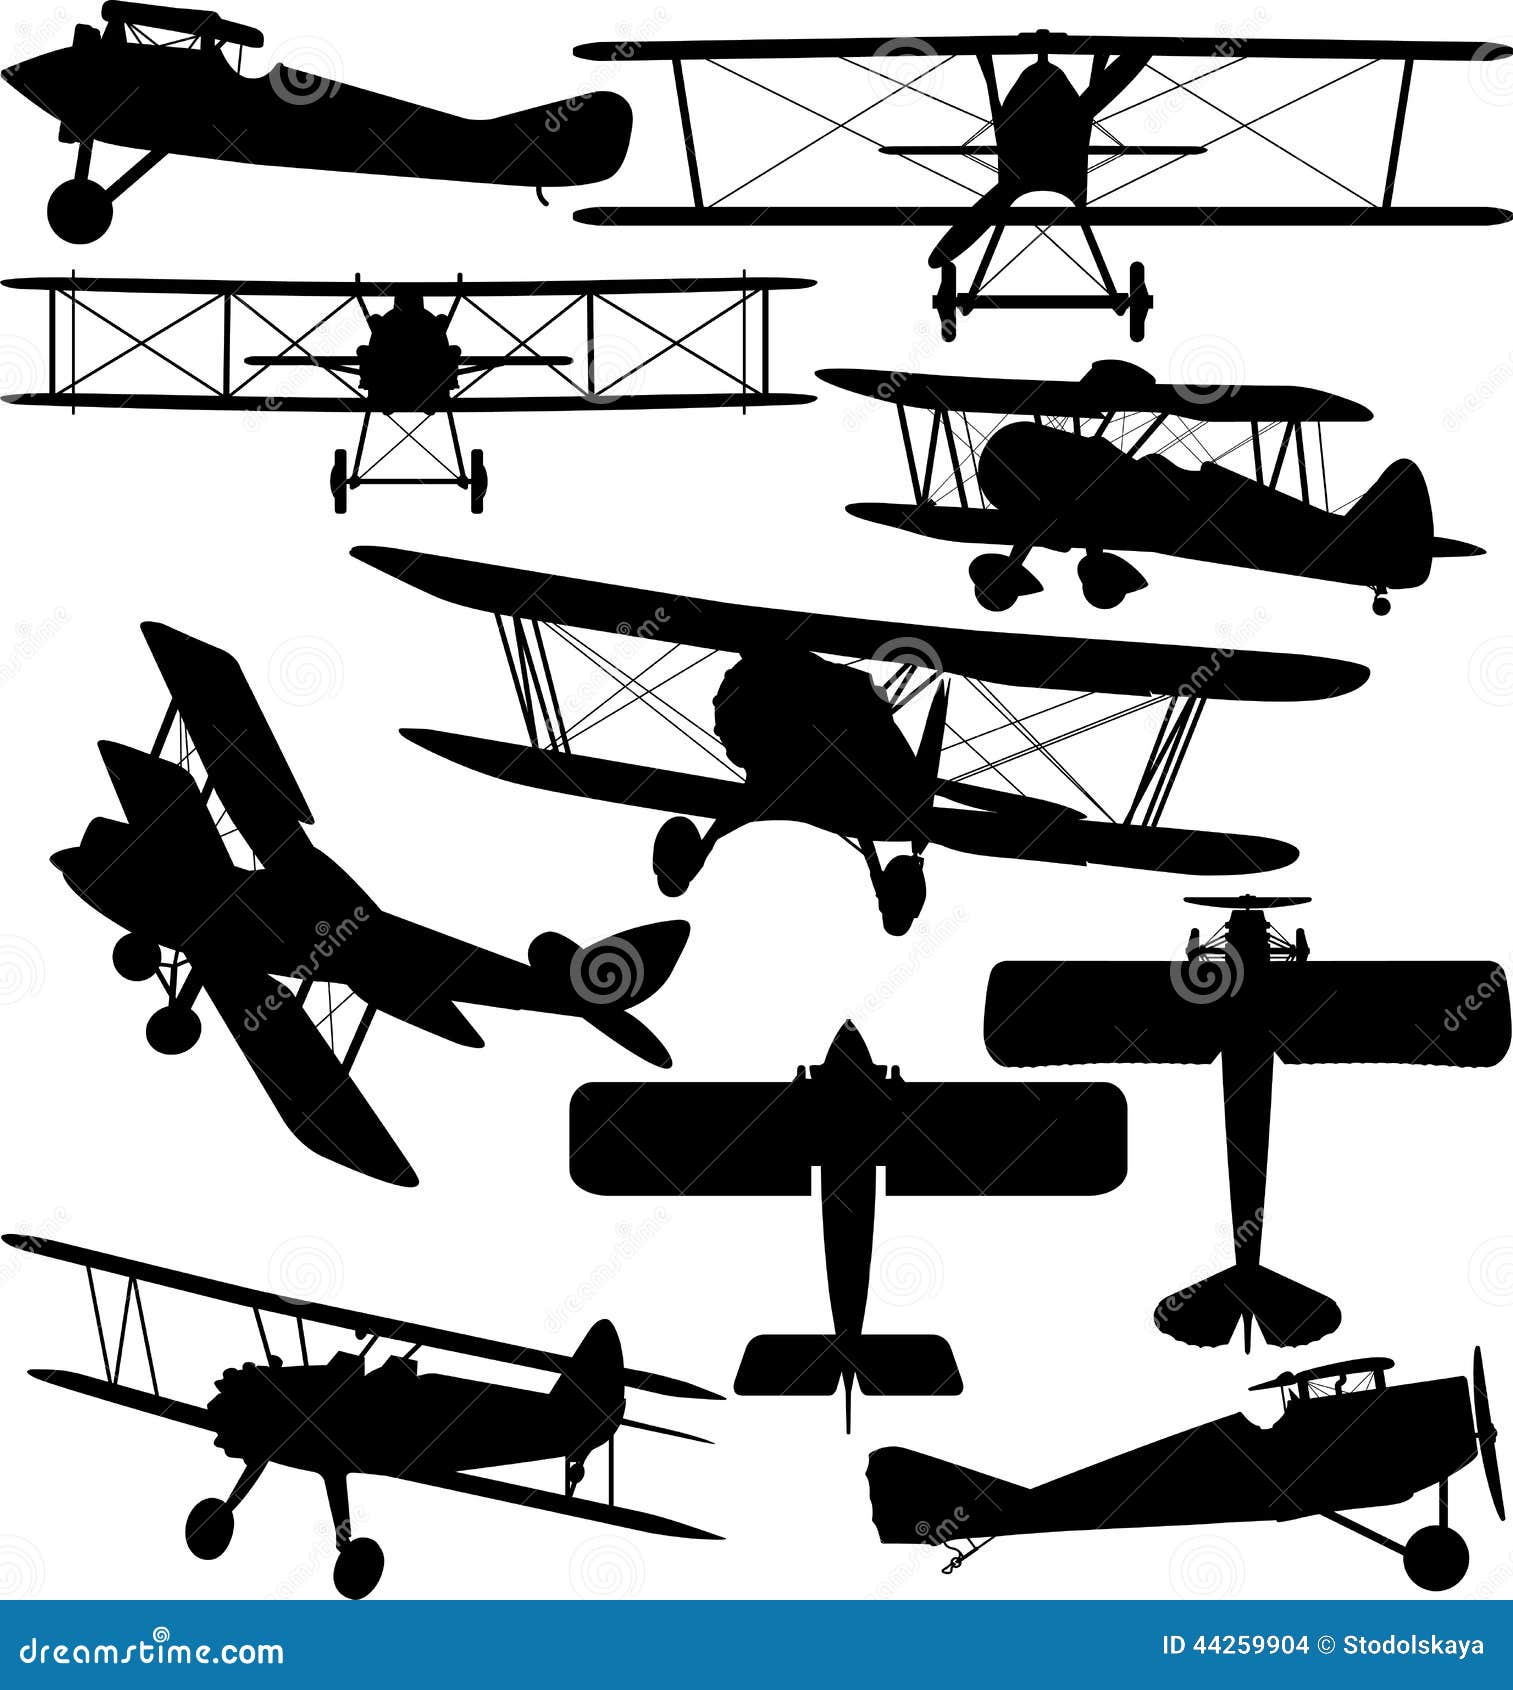 silhouettes of old aeroplane - biplane